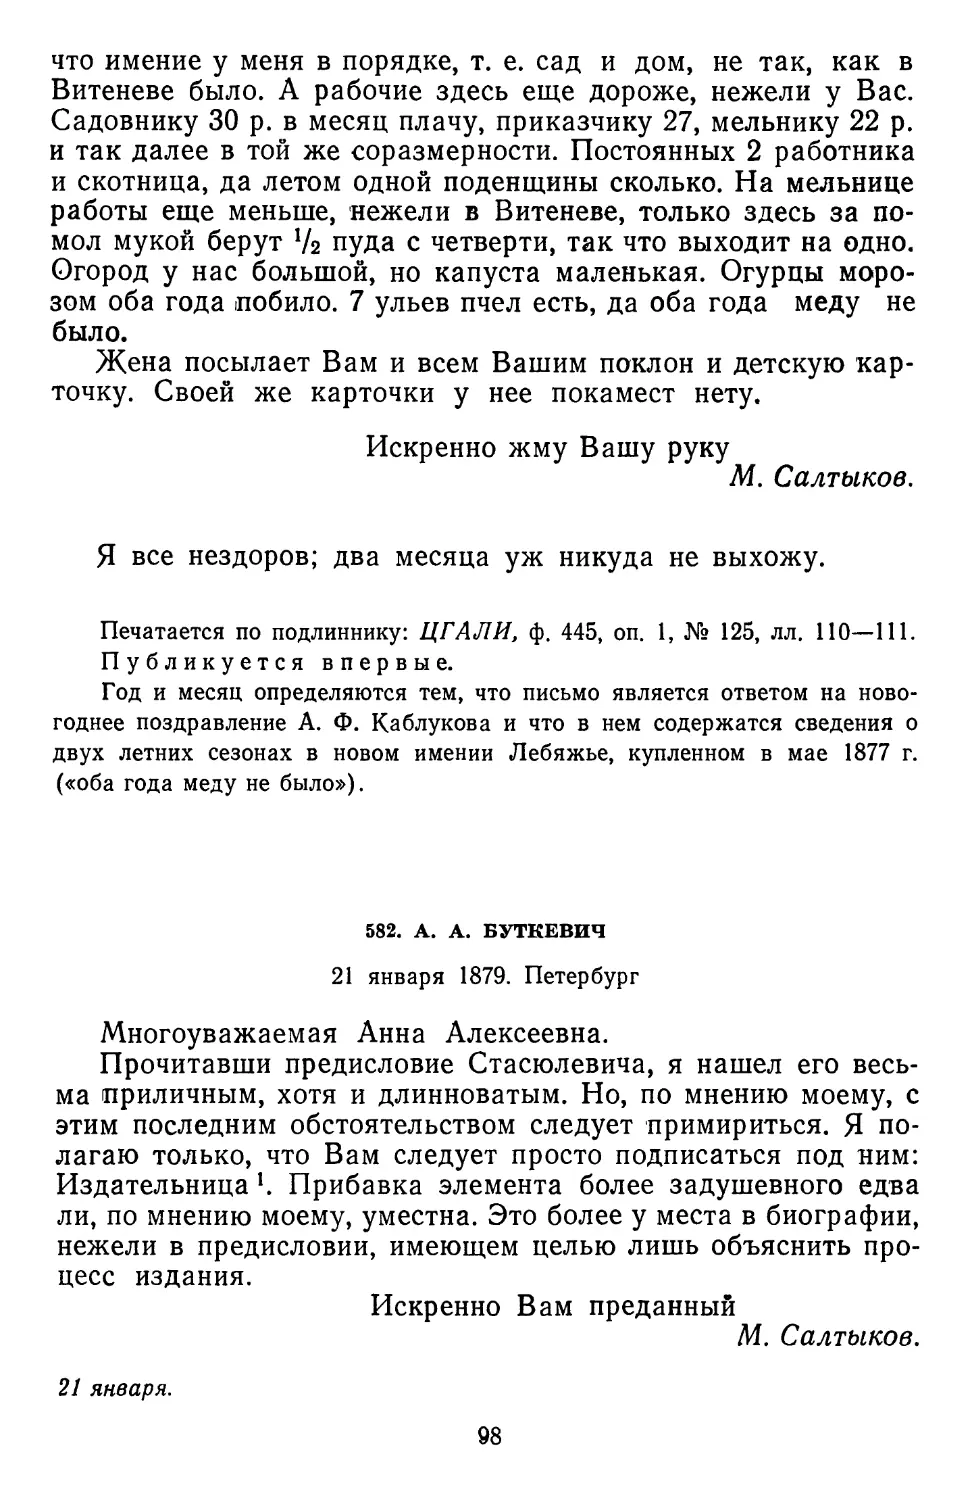 582.А.А. Буткевич. 21 января 1879. Петербург